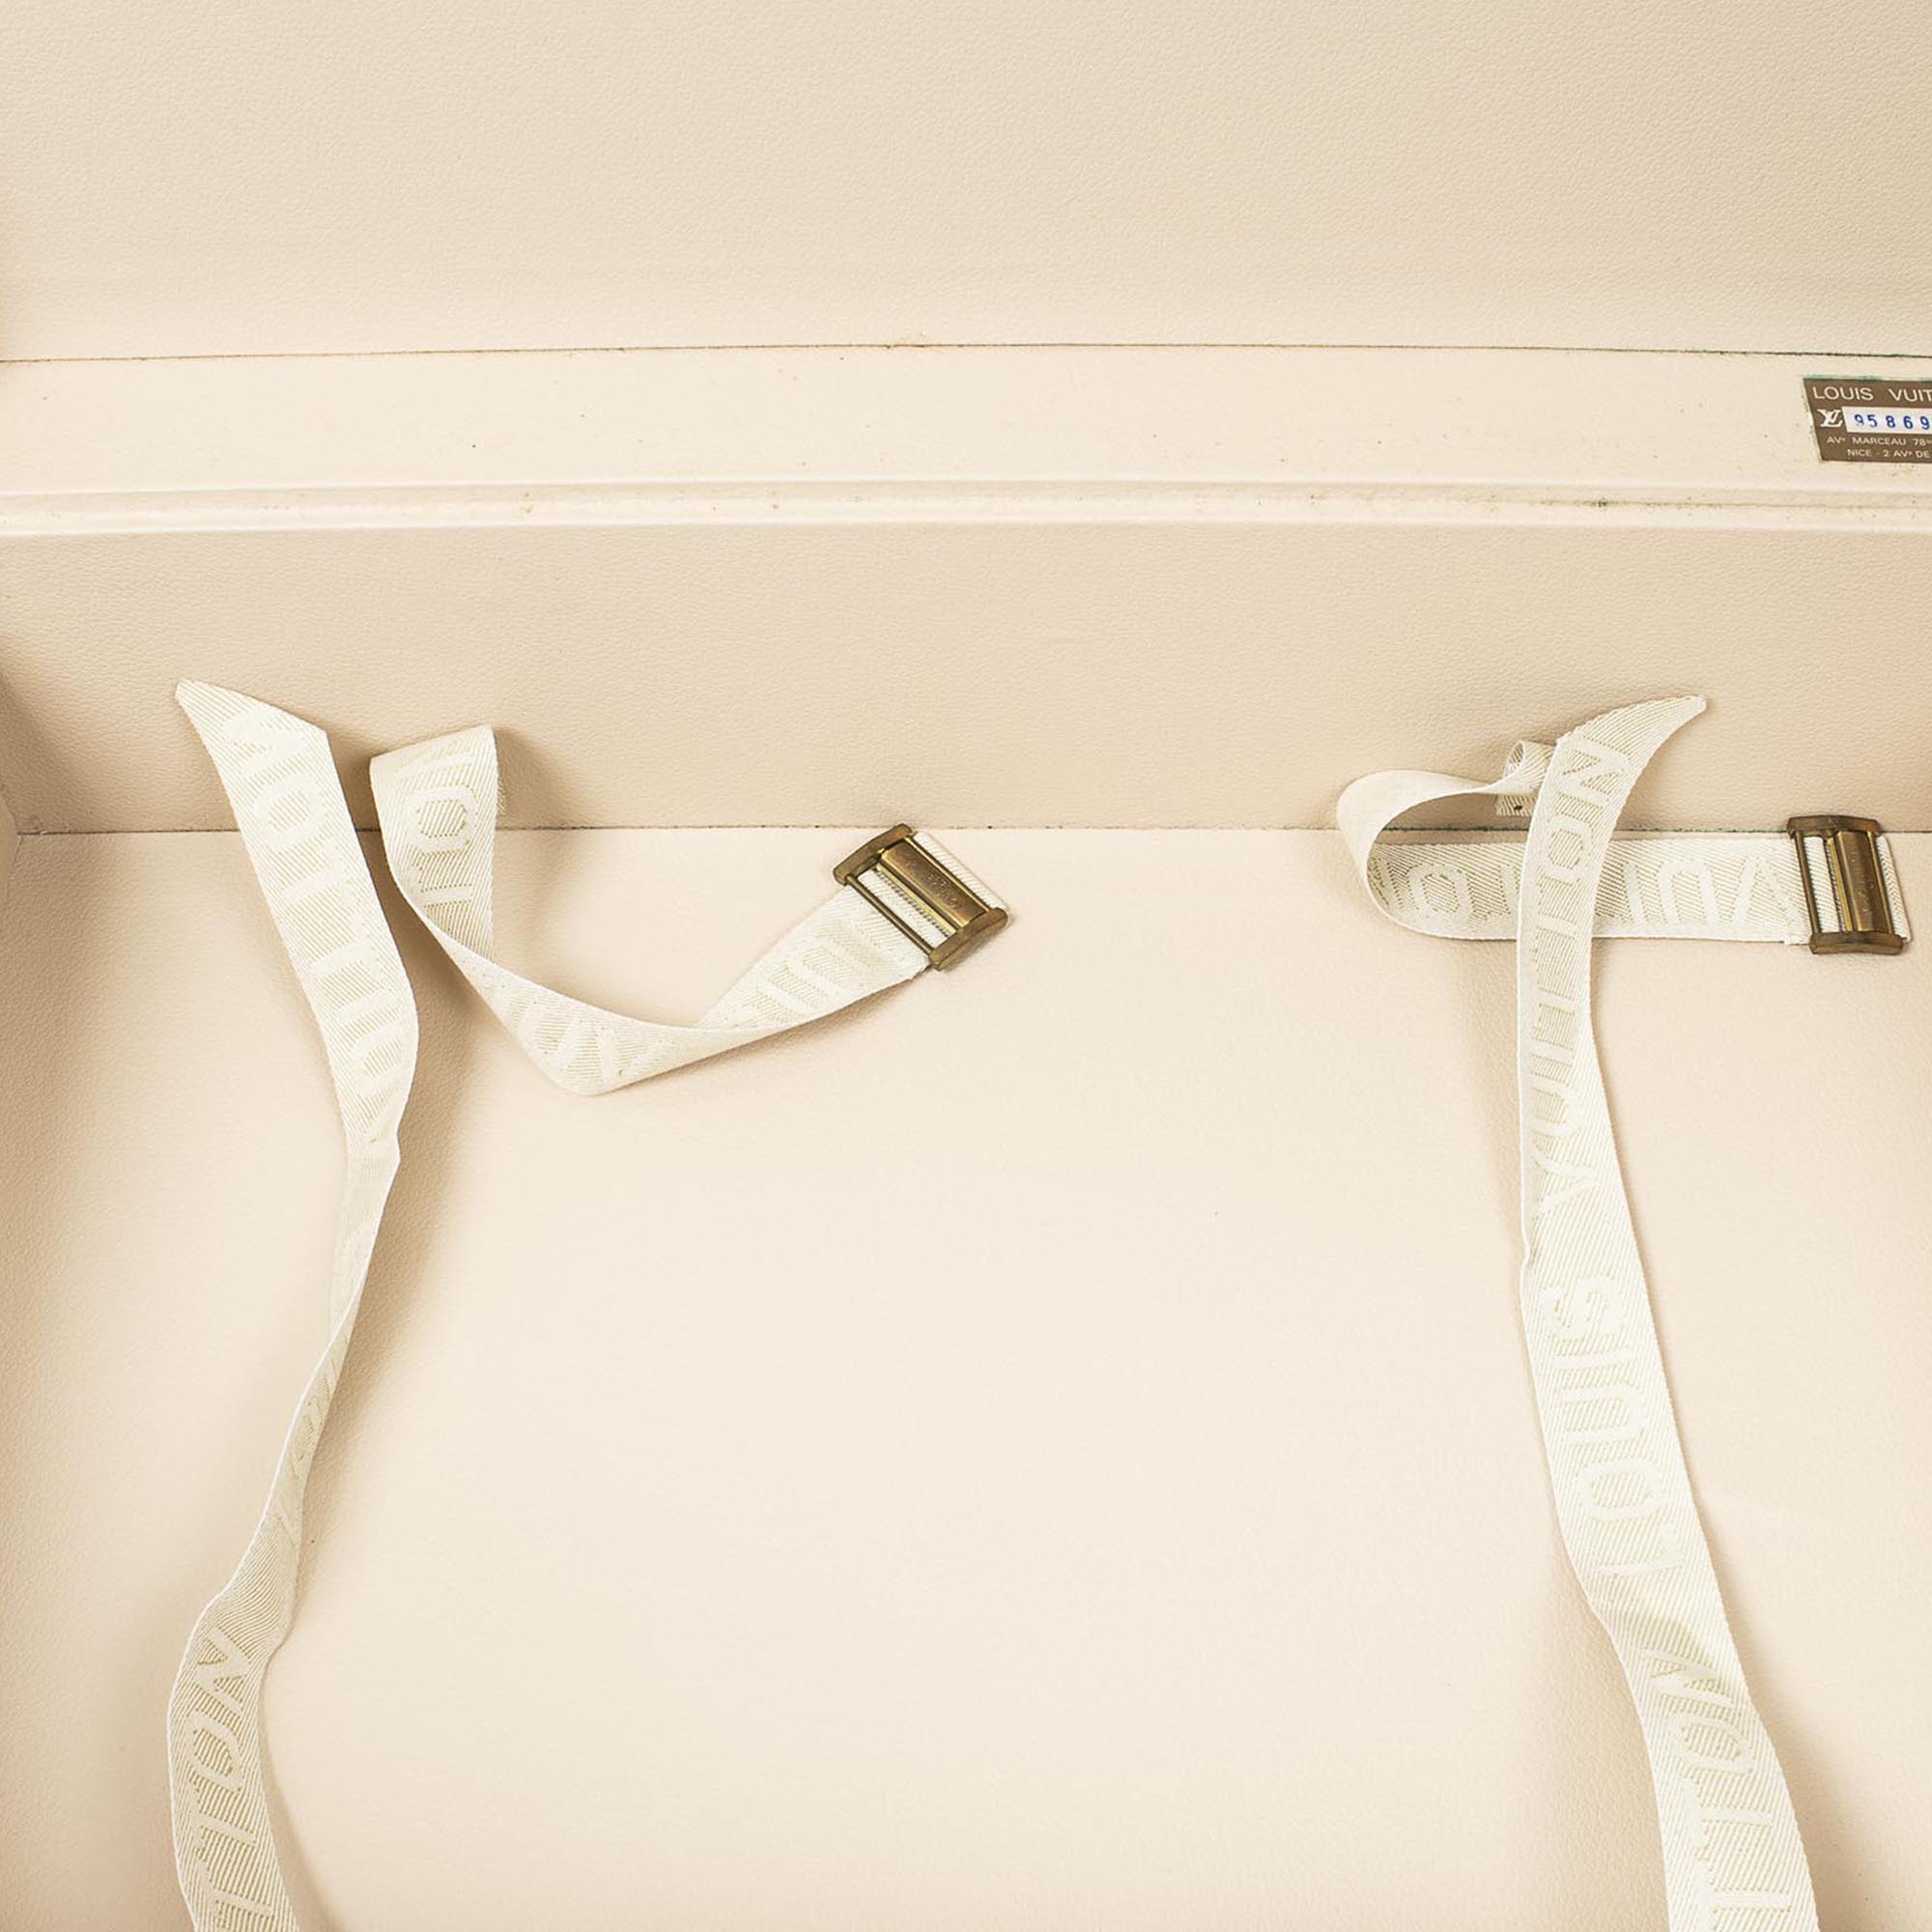 Brown Louis Vuitton Canvas Bisten 50 Travel Bag – Designer Revival